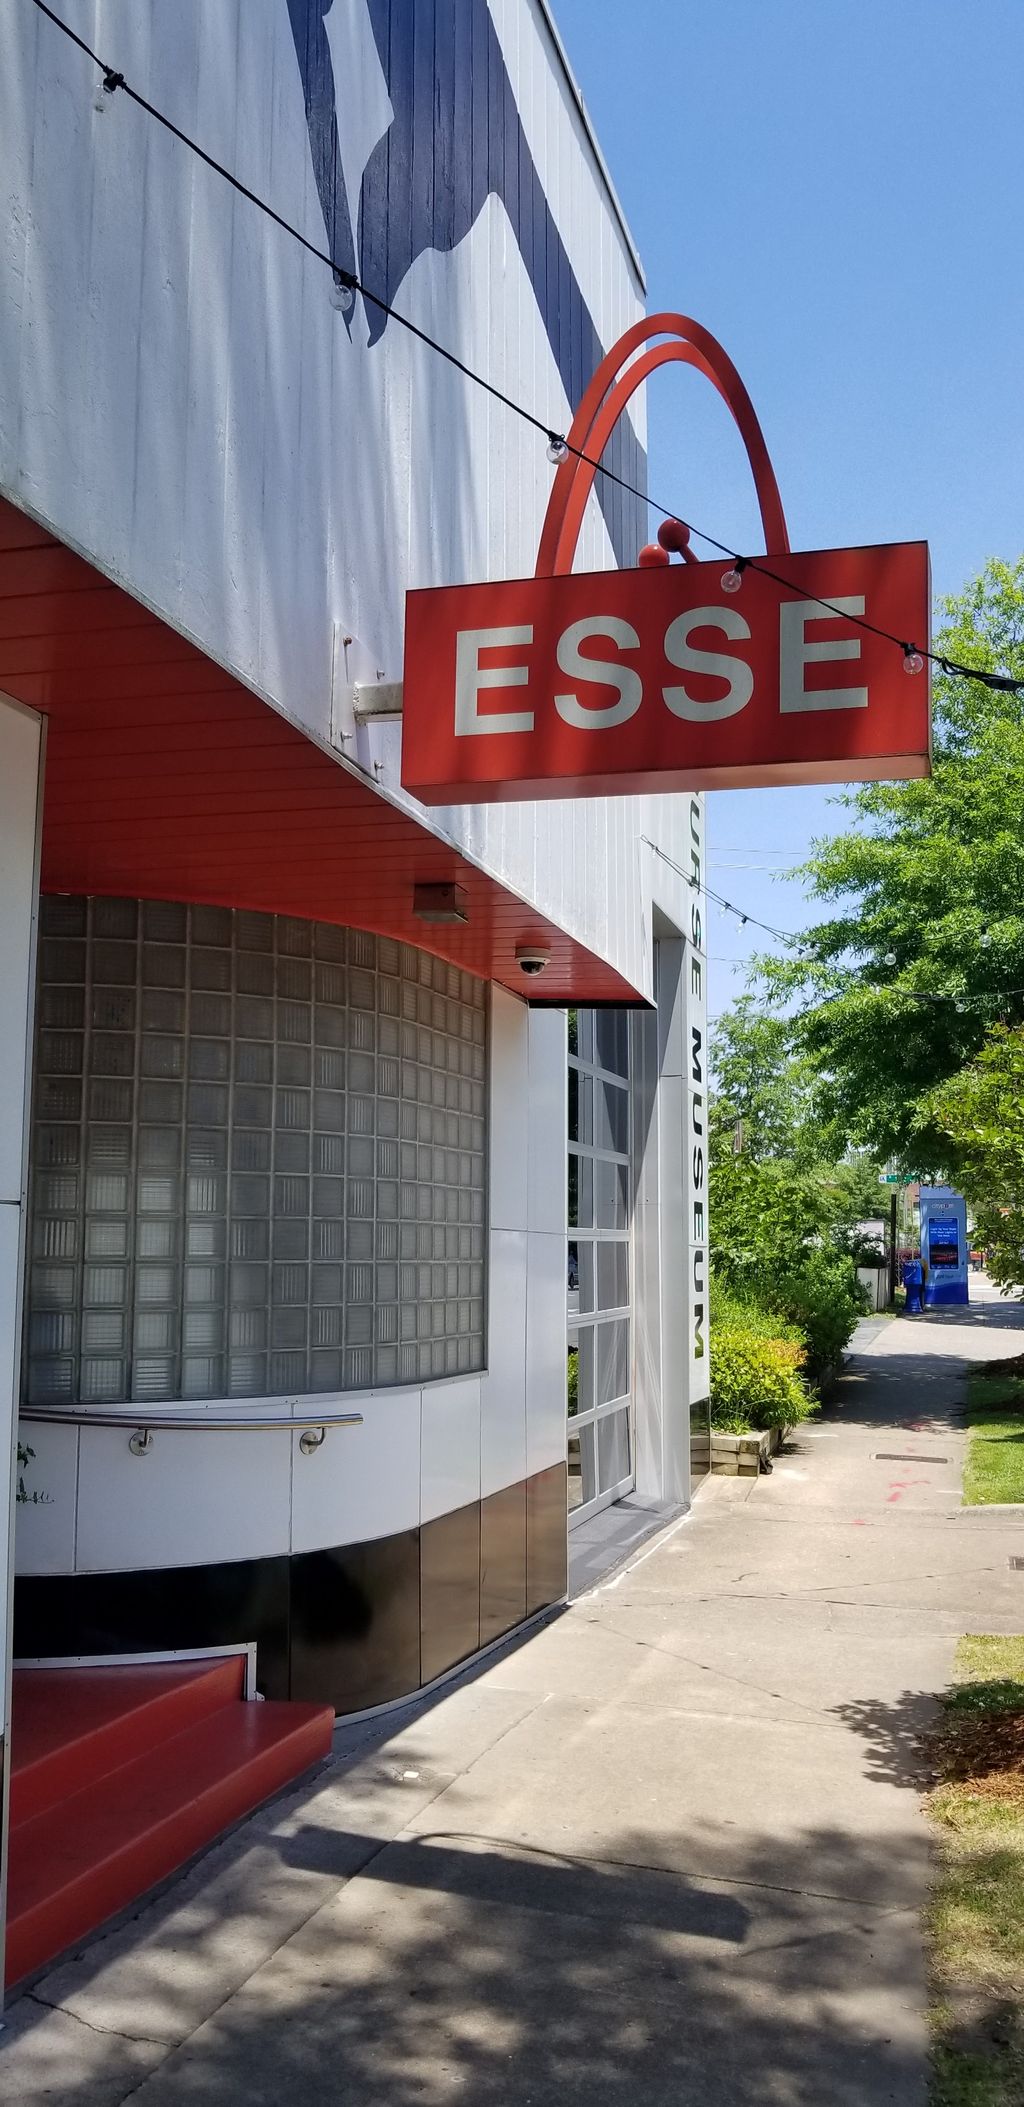 Esse Purse Museum & Store